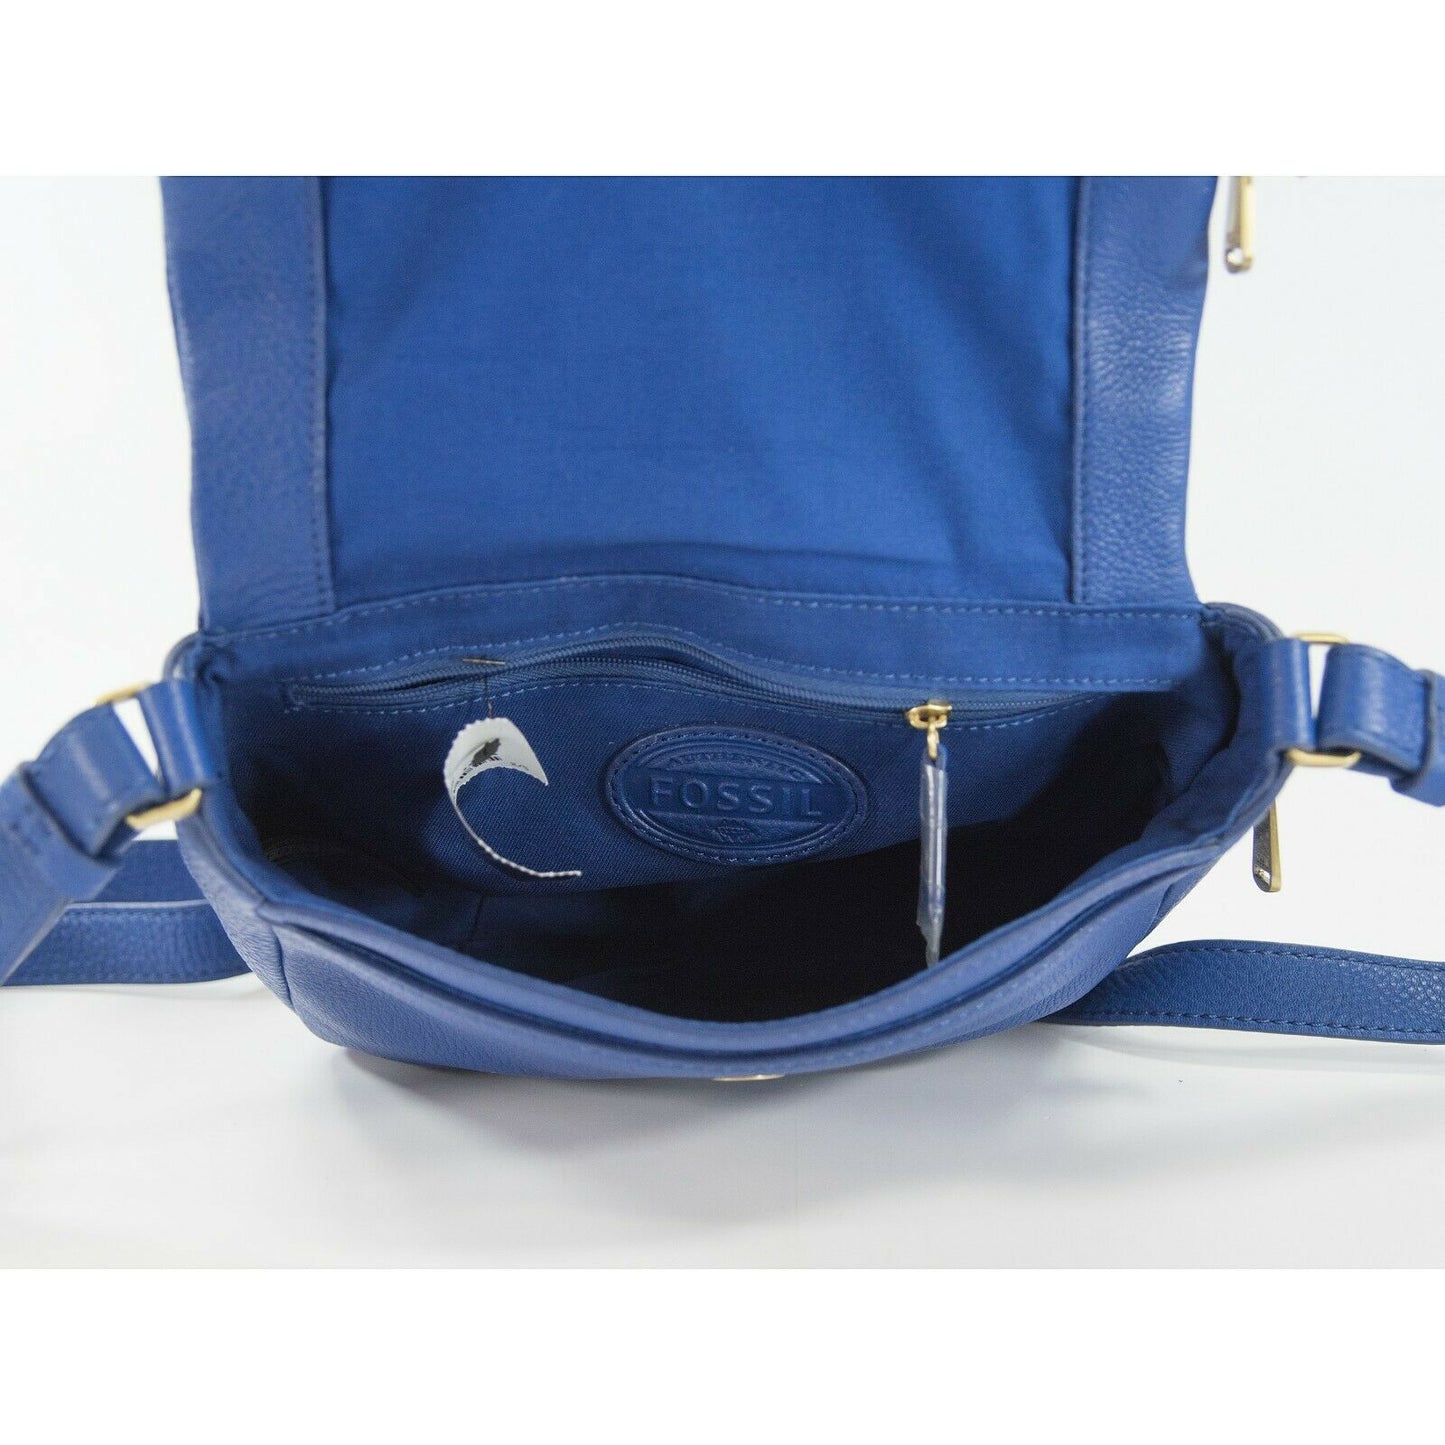 Fossil Blue Pebbled Leather Flap Expandable Crossbody Bag EUC